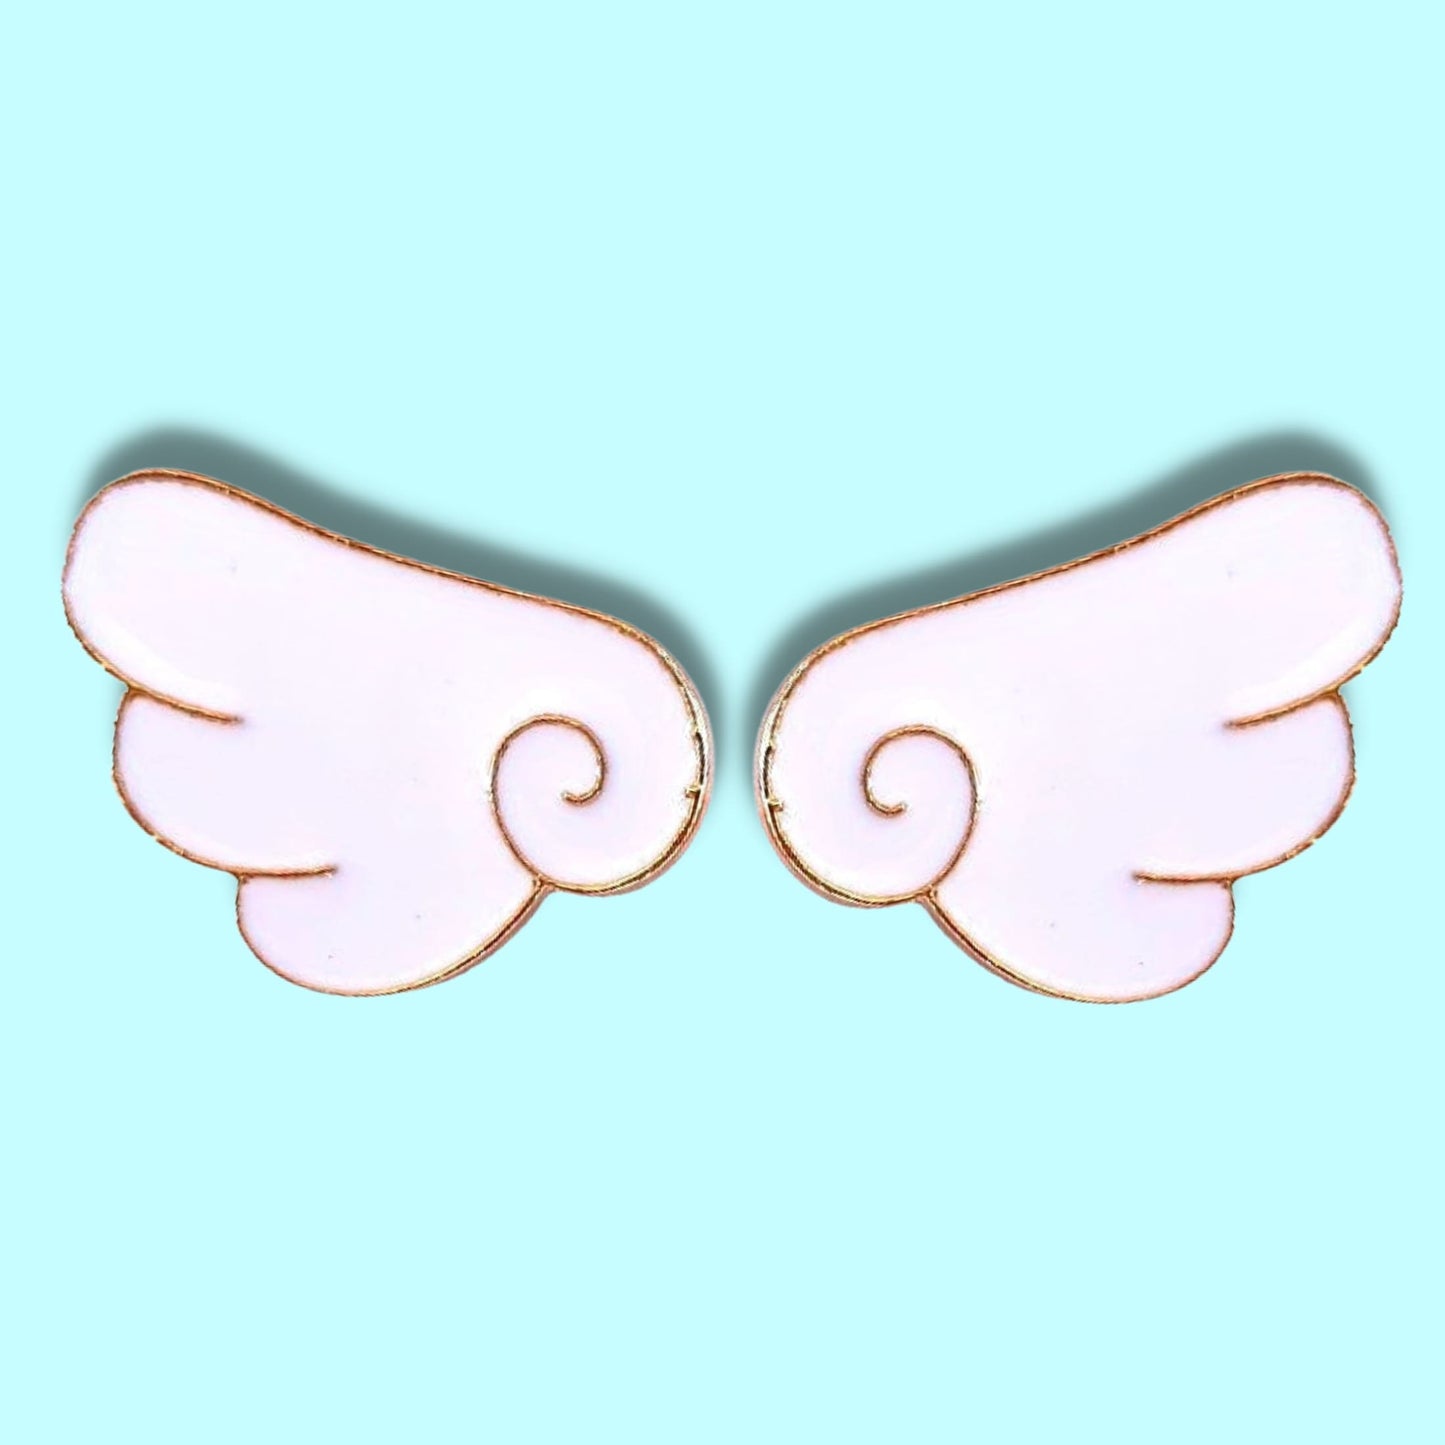 Kawaii Cloud Wings Enamel Pins from Confetti Kitty, Only 7.99